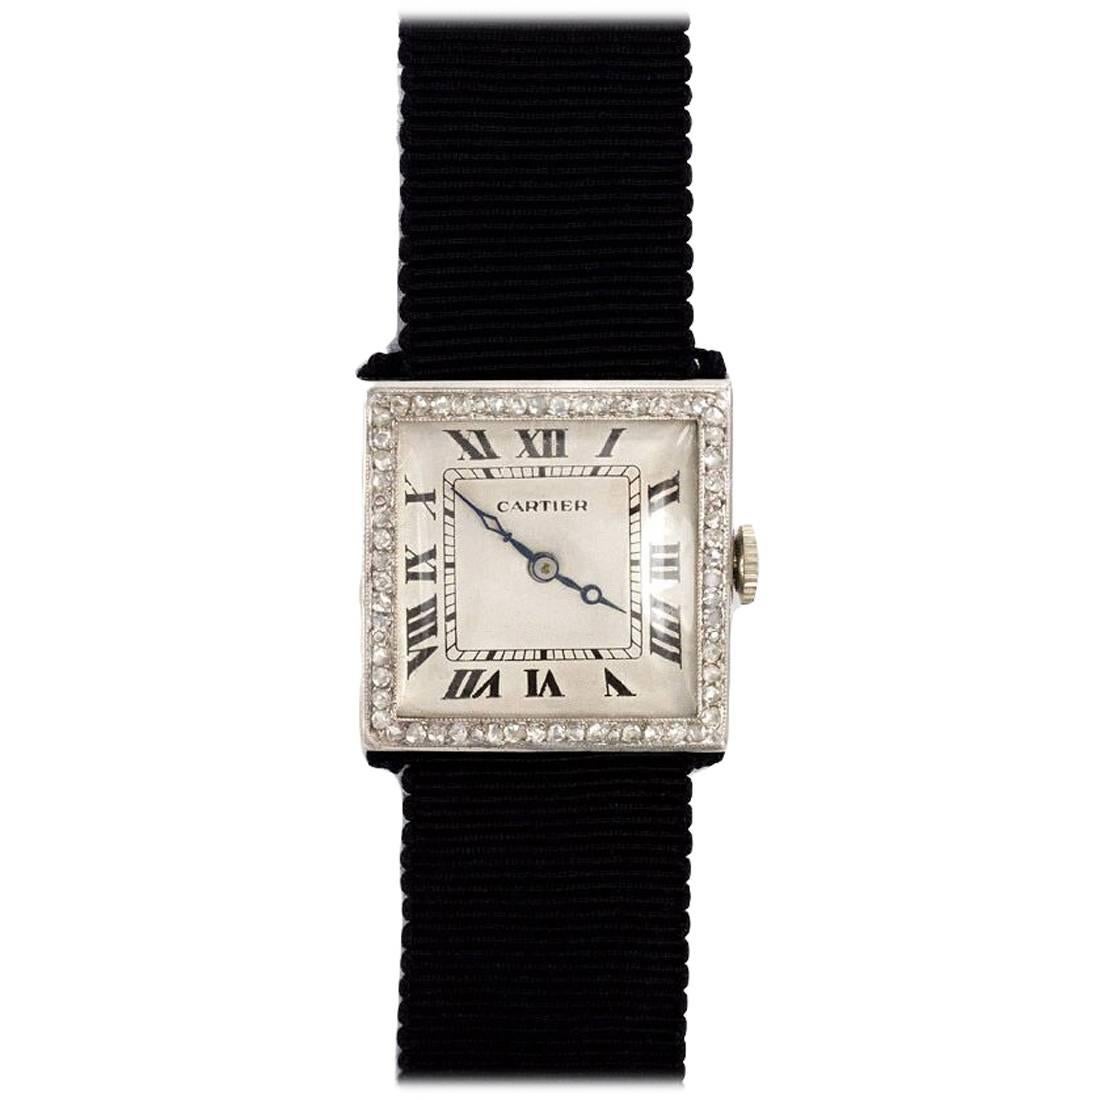 French Art Deco Cartier Diamond Watch